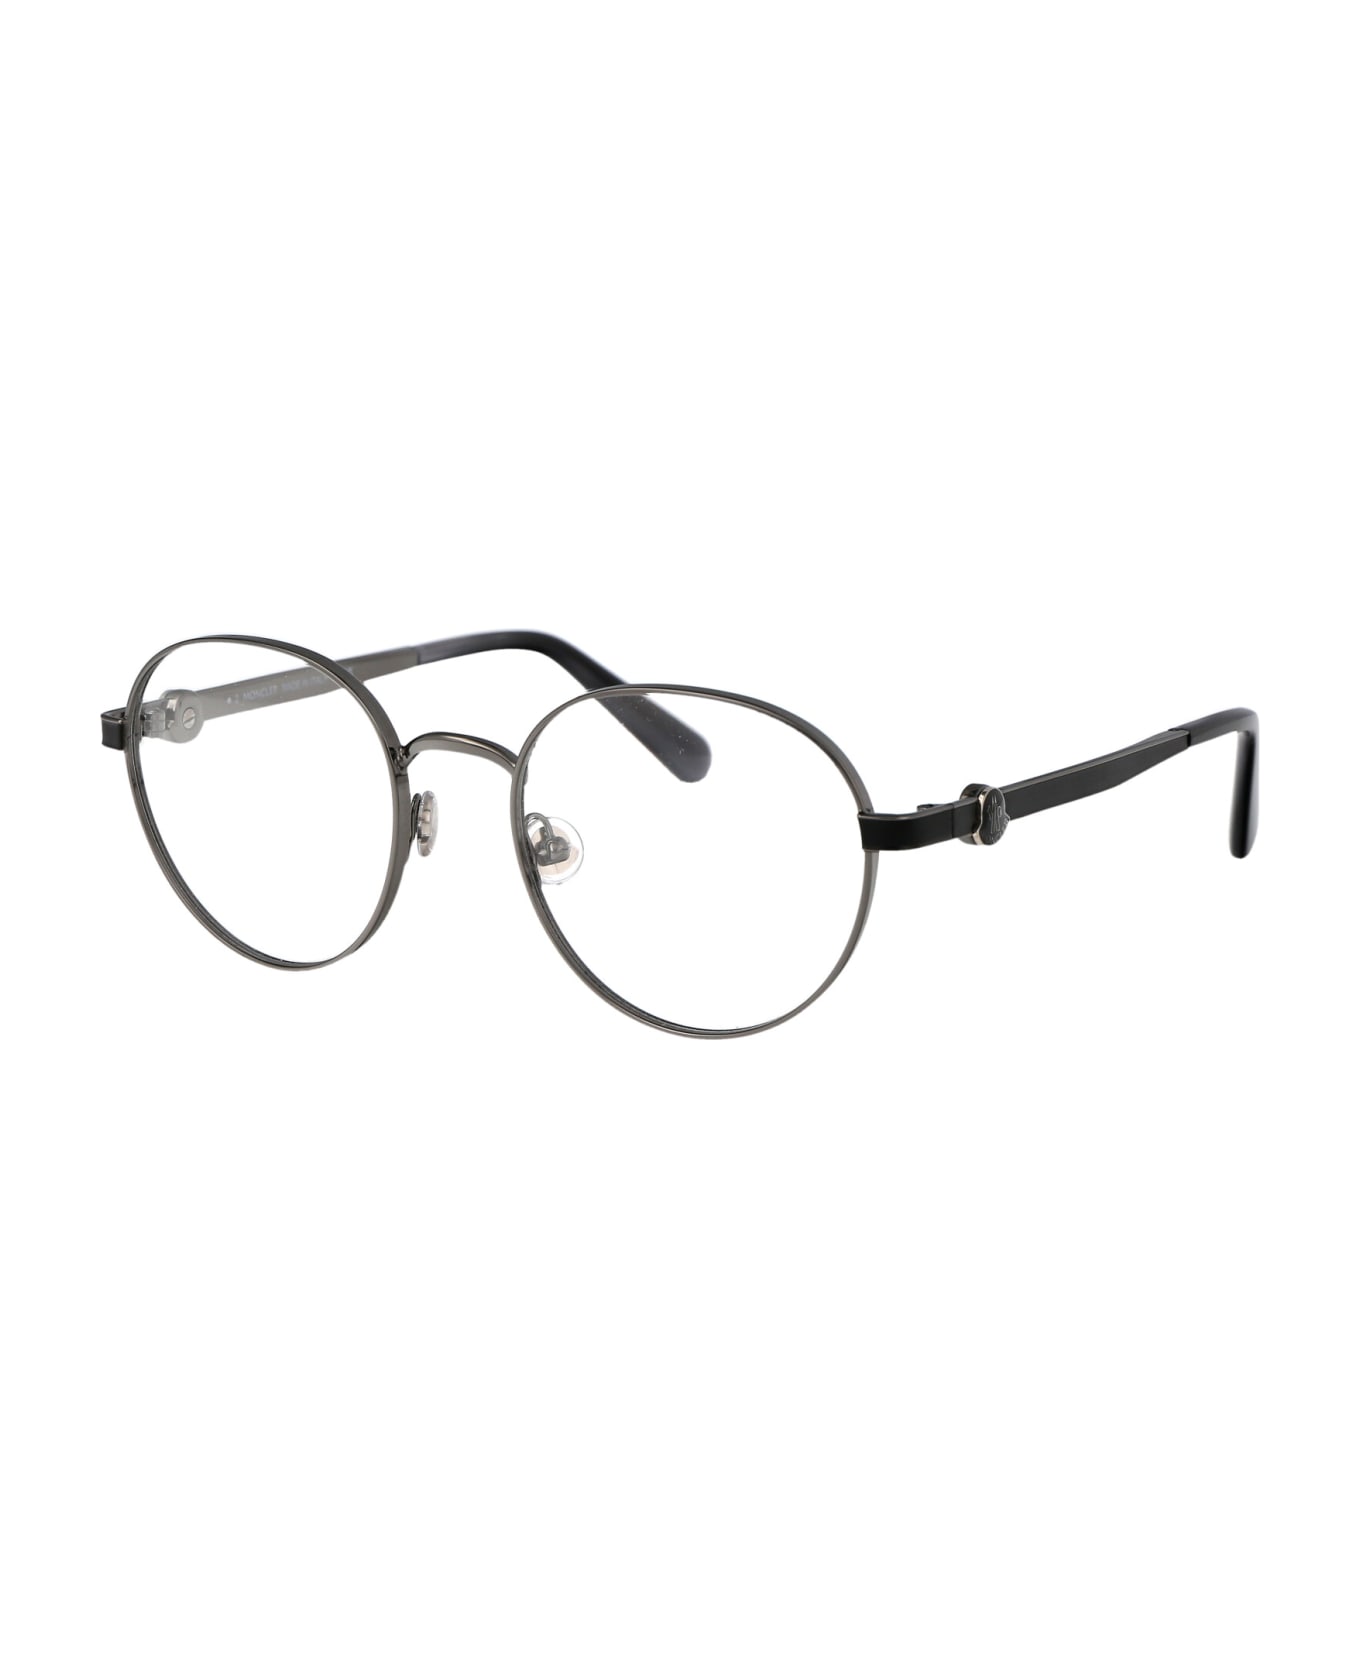 Moncler Eyewear Ml5179 Glasses - 008 Antracite Lucido